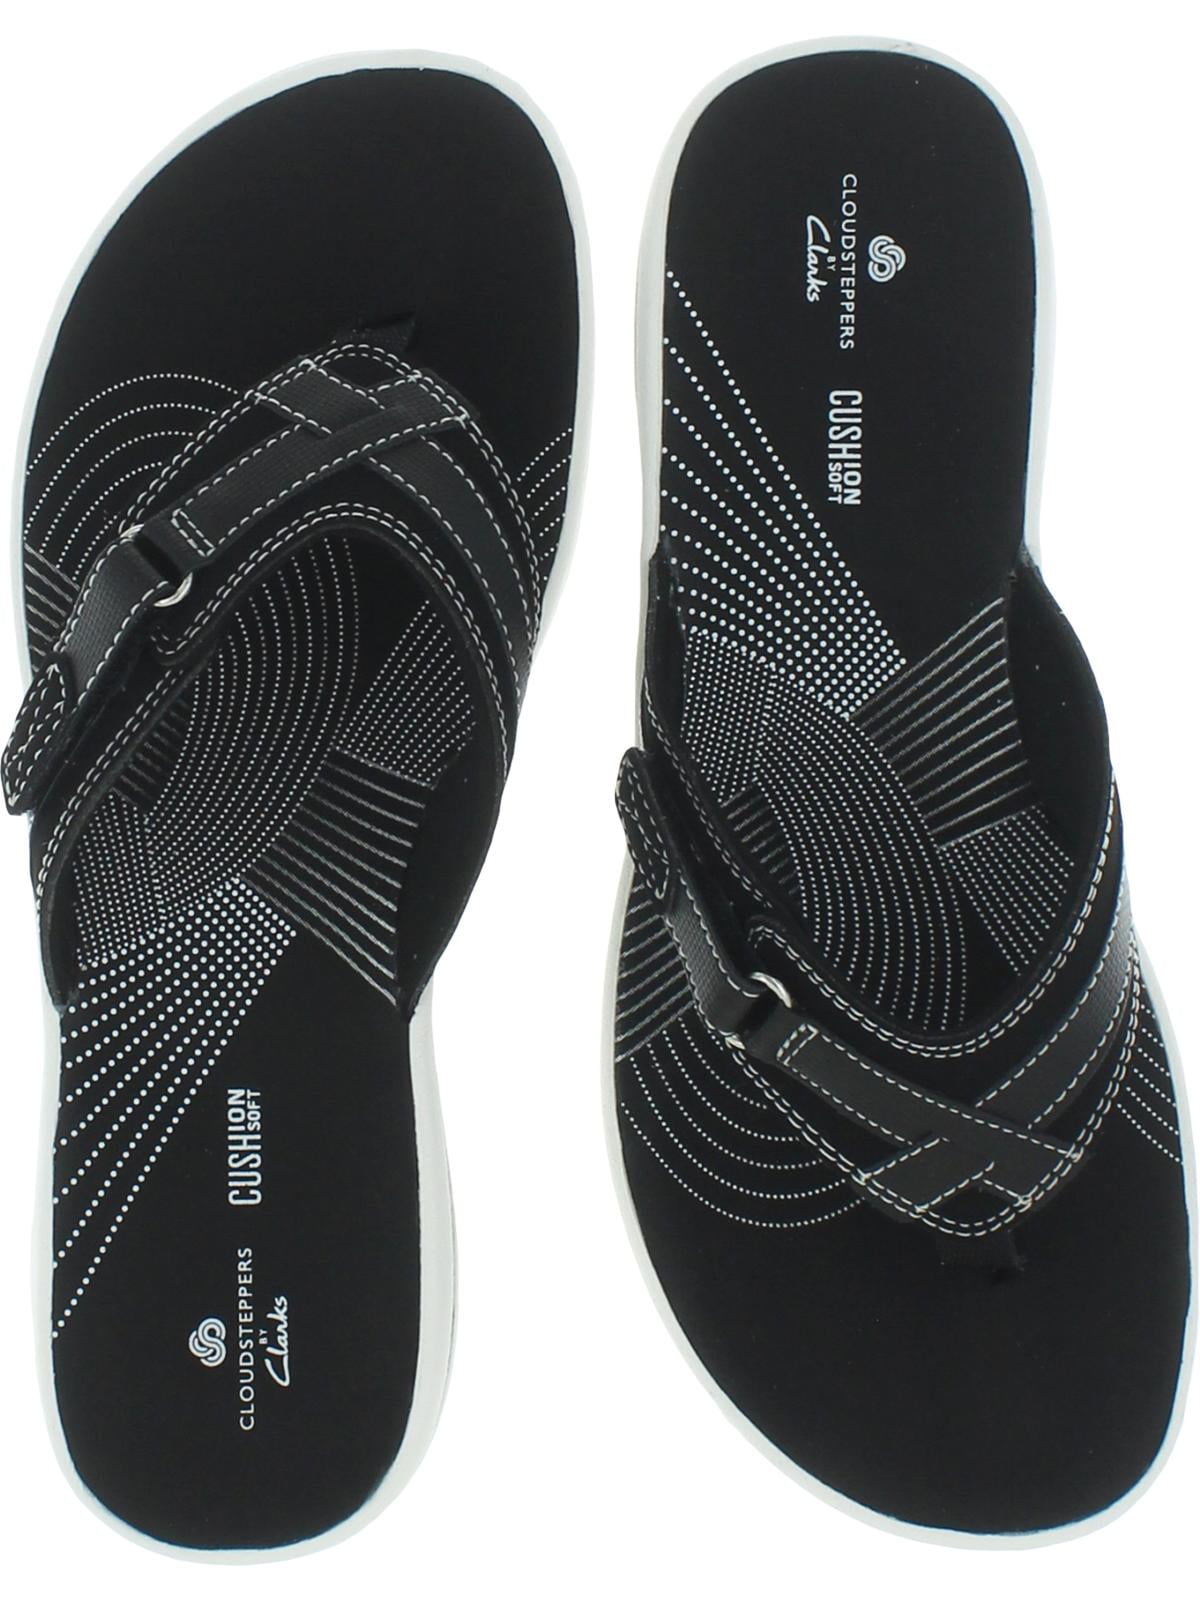 WOMENS Breeze Sea Black Synthetic Flip Flop Sandals